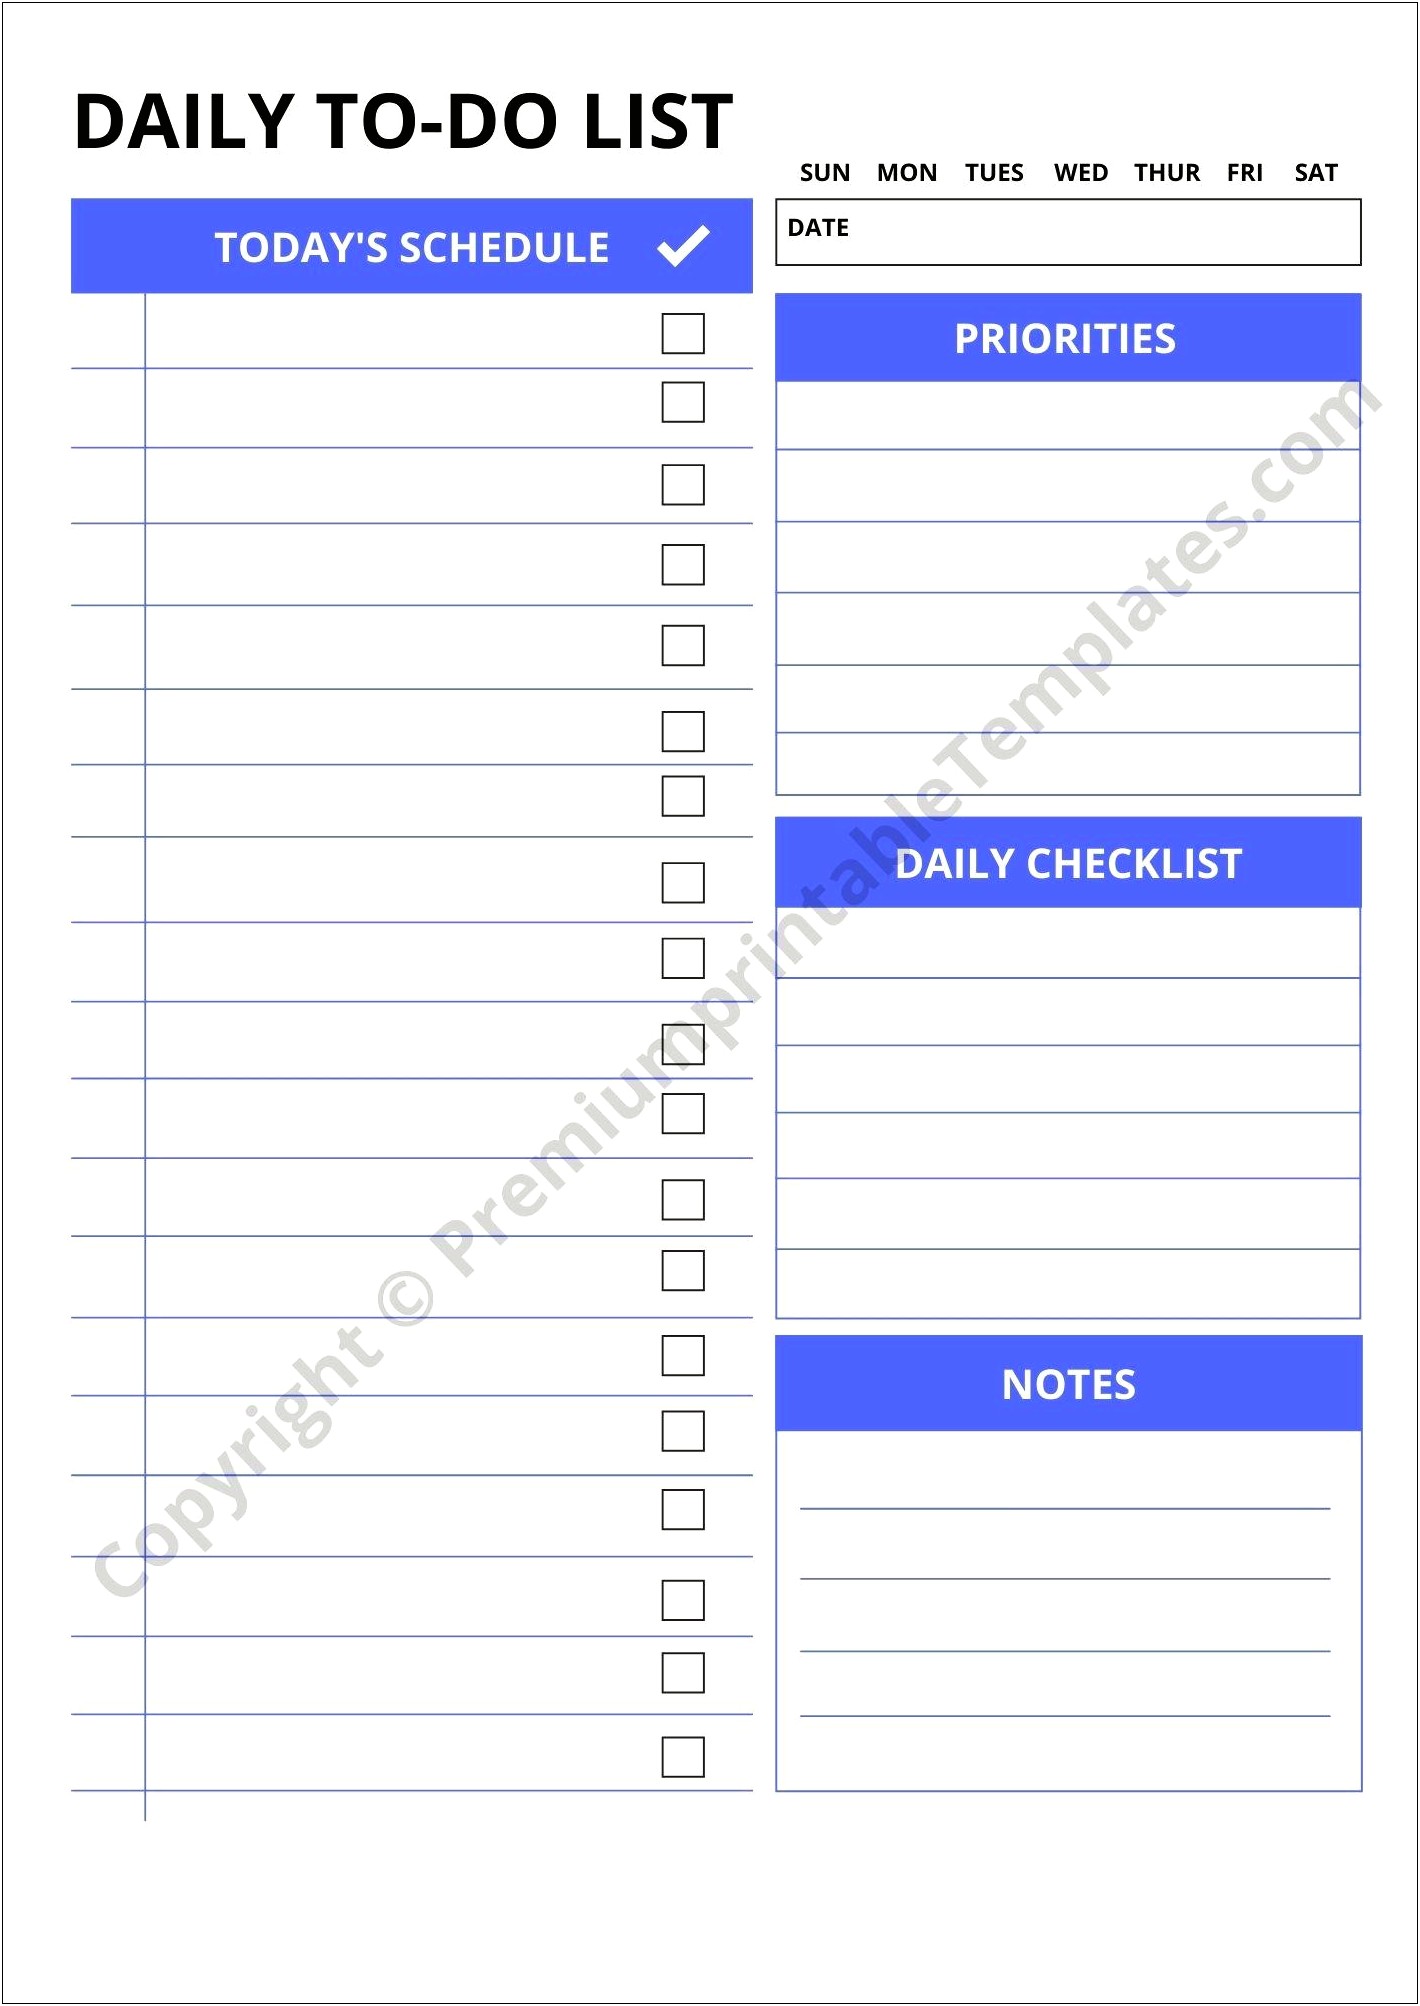 Daily Duties Checklist Template Microsoft Word